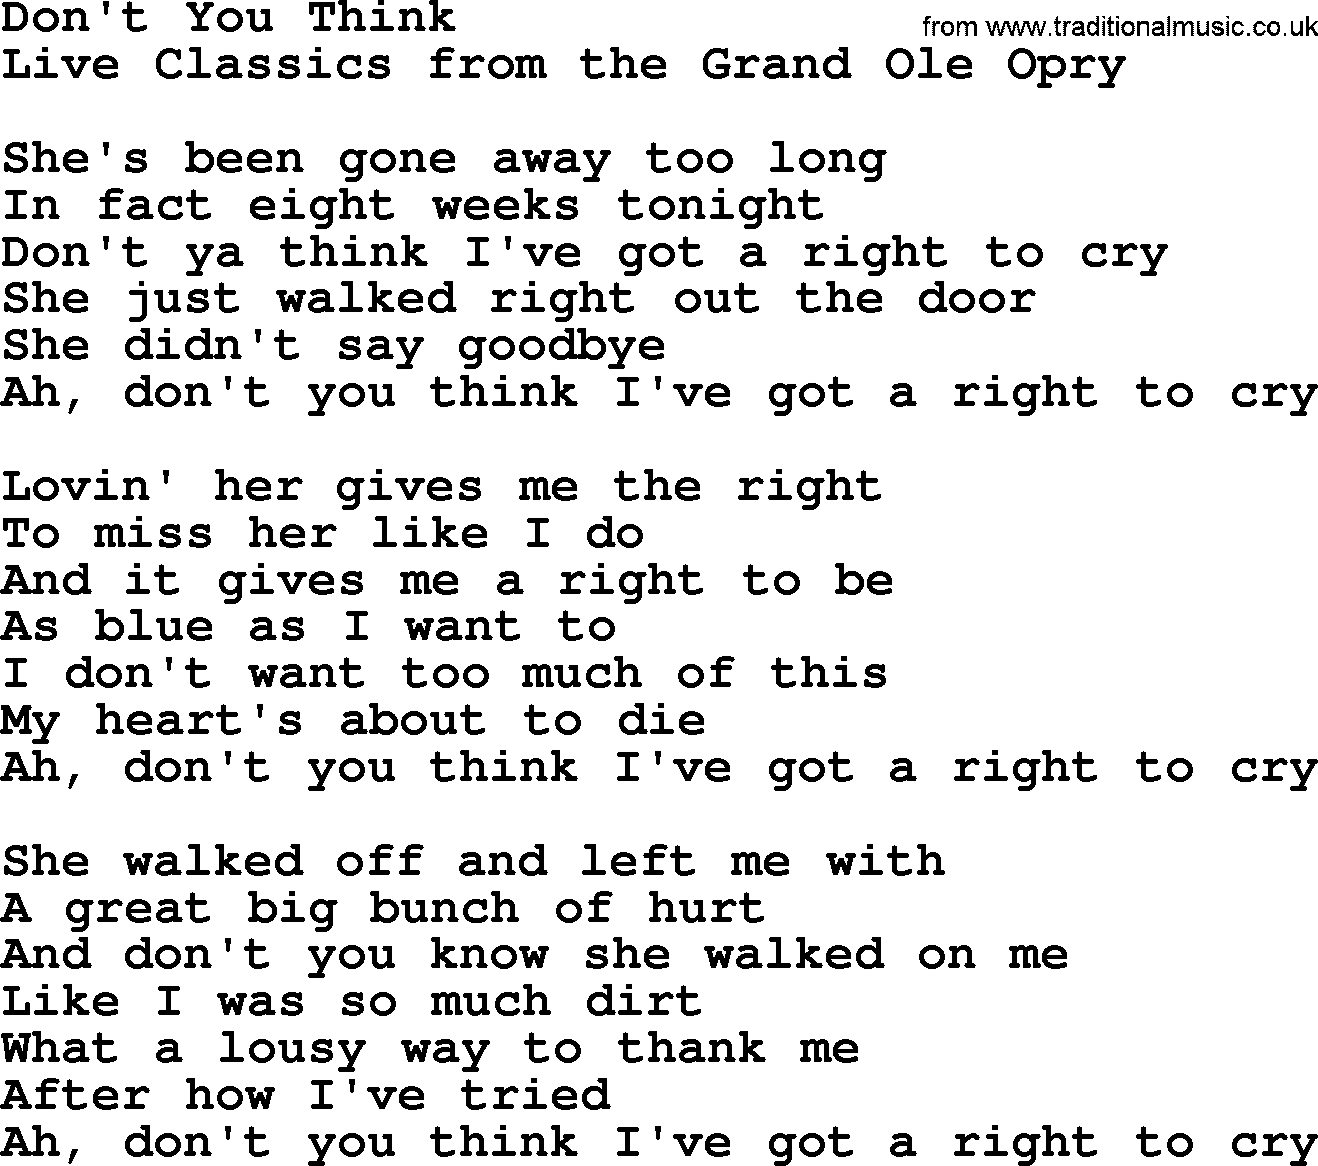 Marty Robbins song: Don't You Think, lyrics